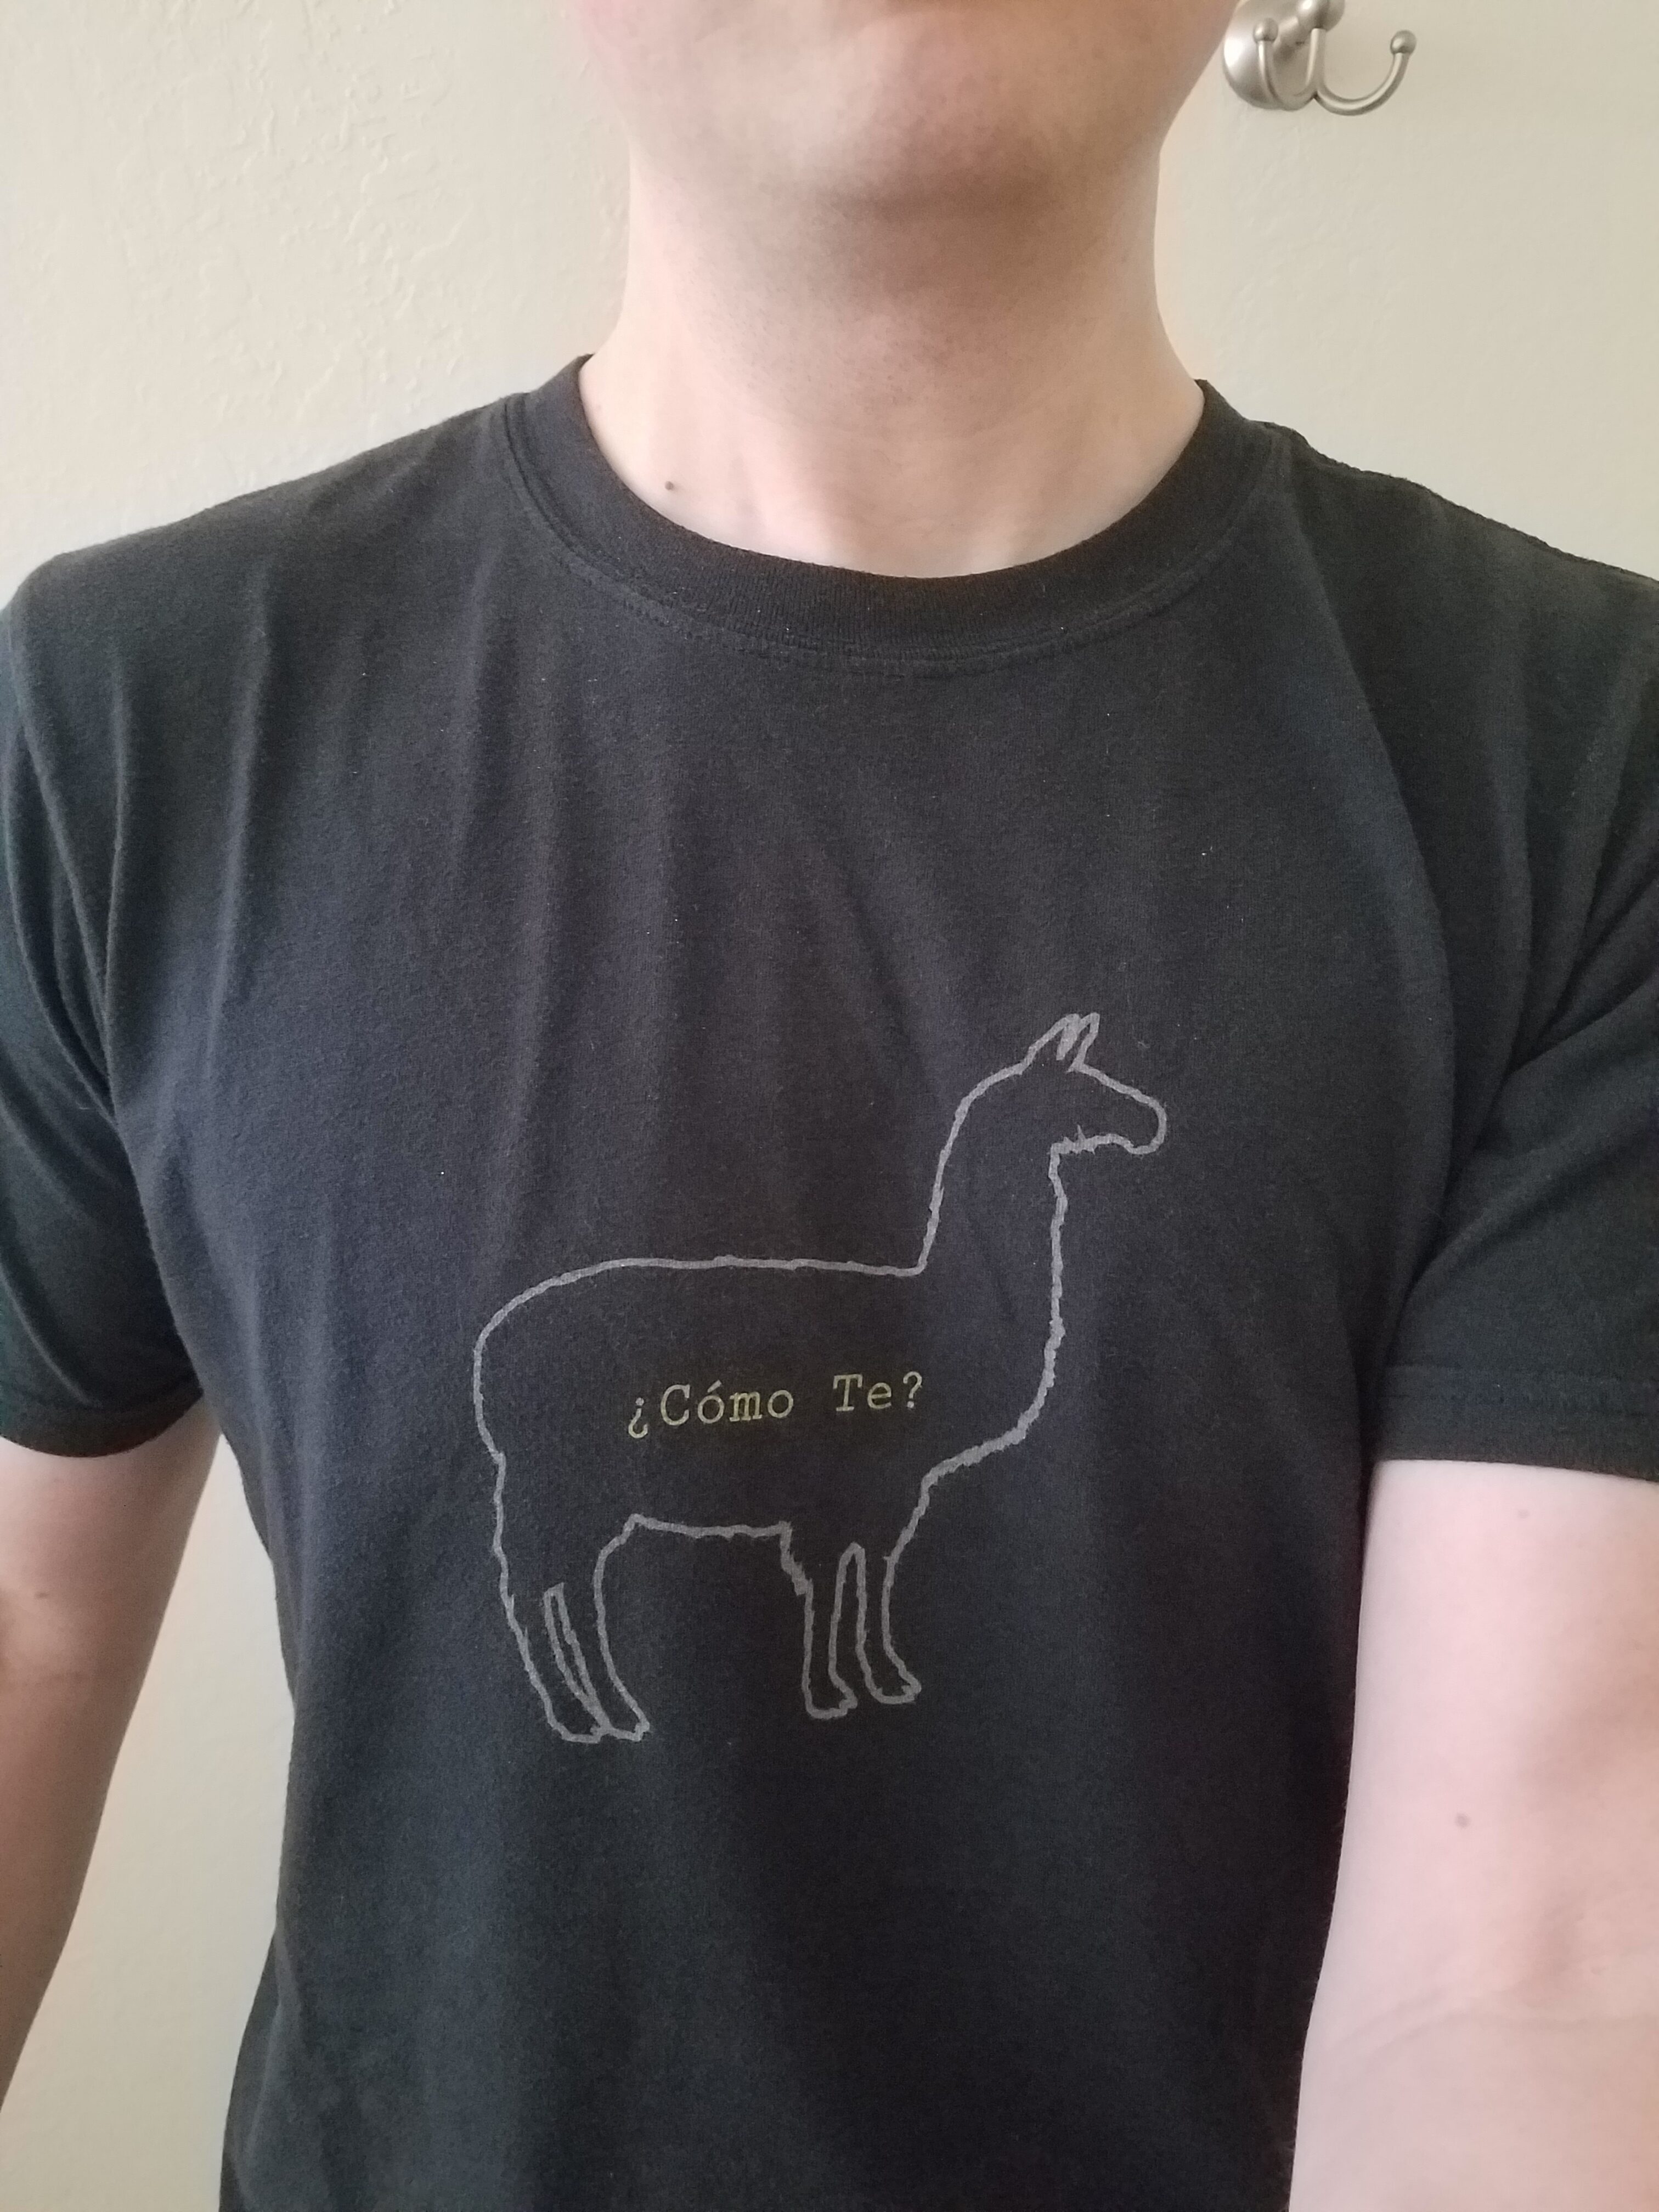 Prana shirt that says, "como te" inside the image of a llama